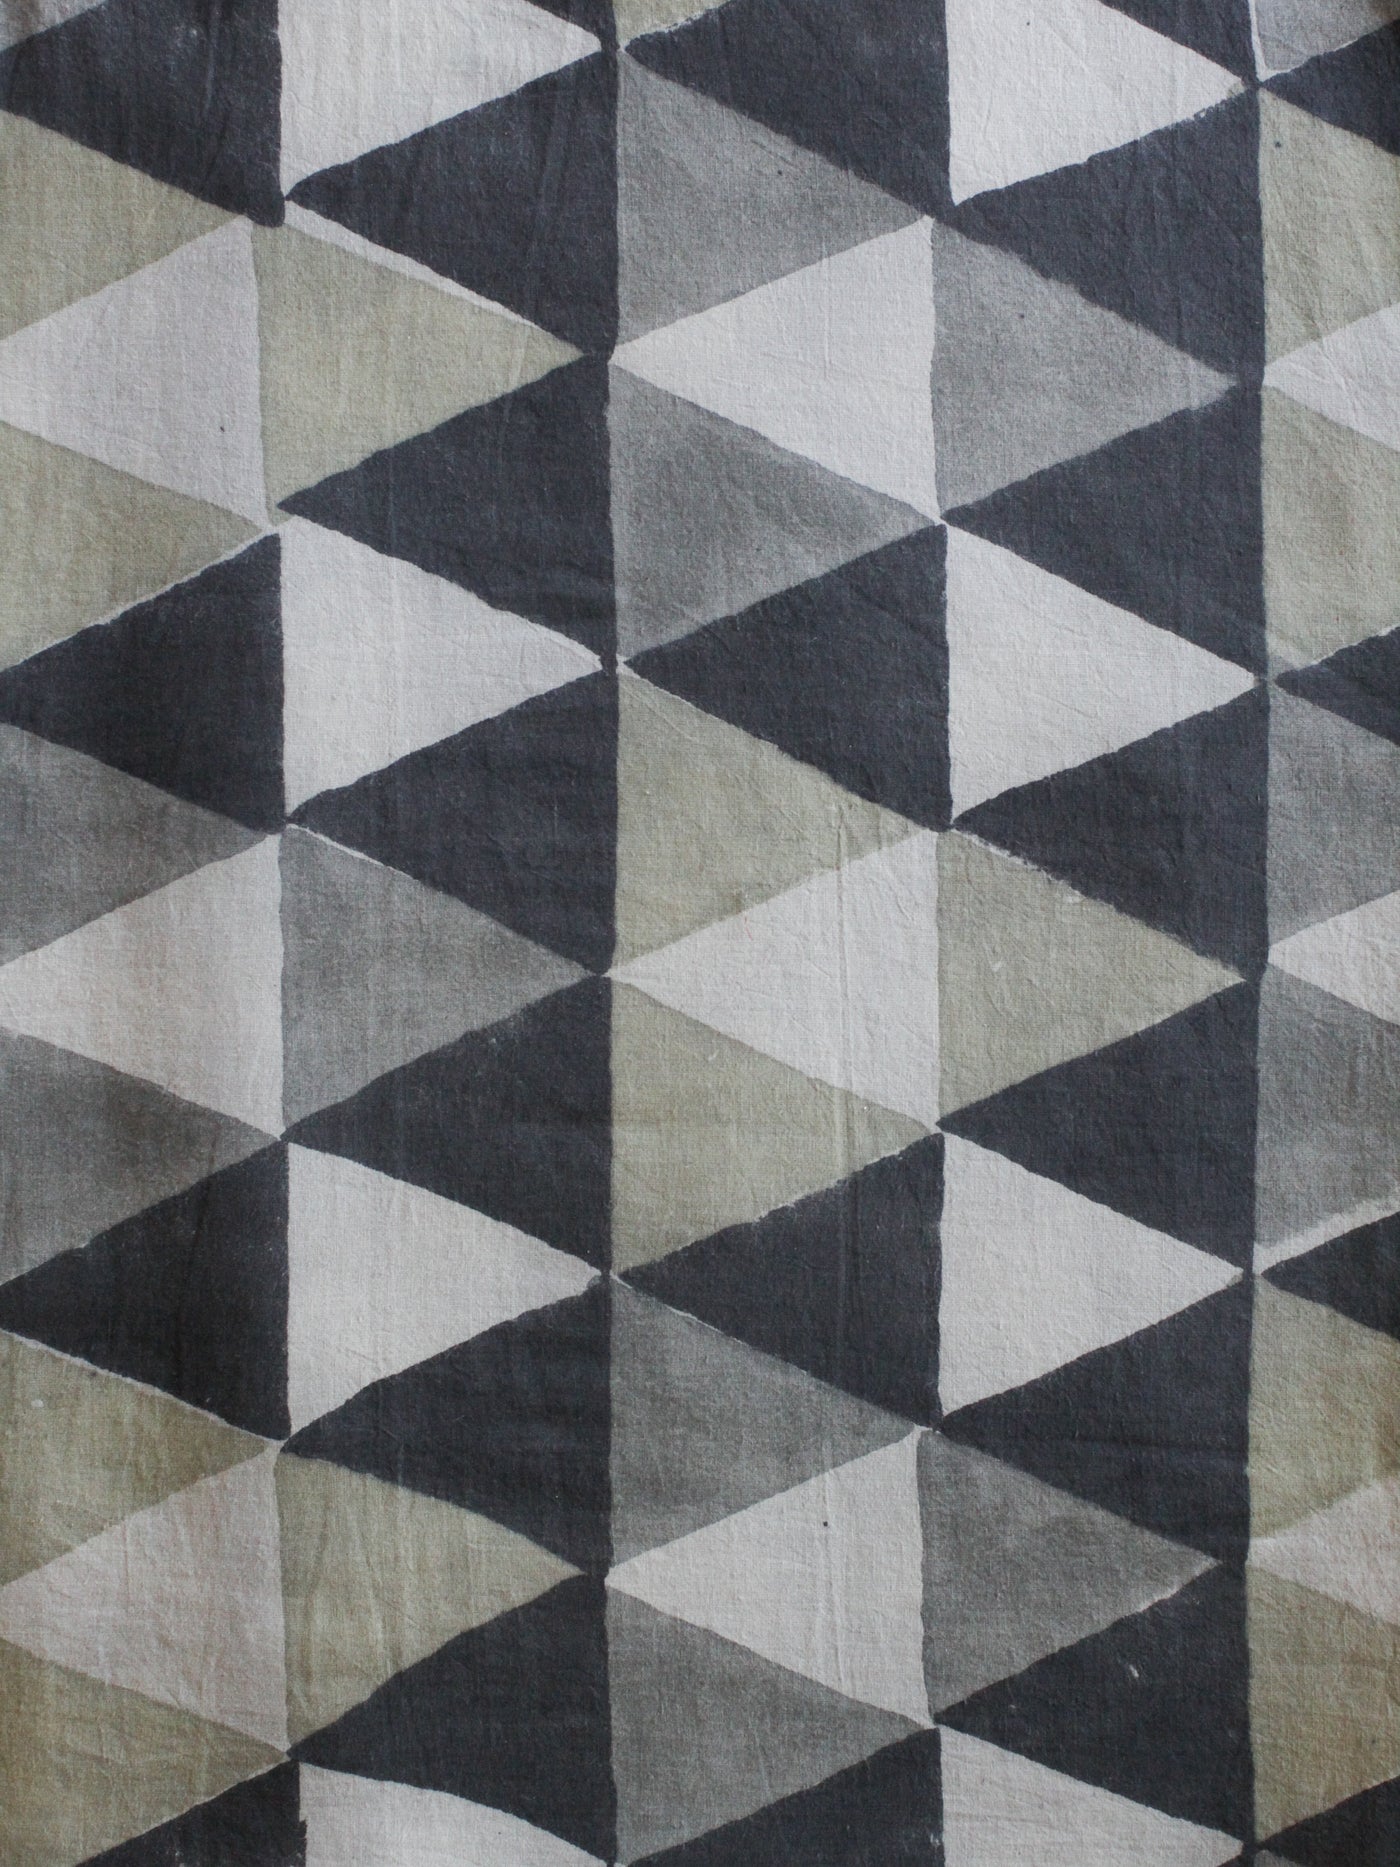 Blockprint Natural Dye Fabric #004 - Triangle Peyote